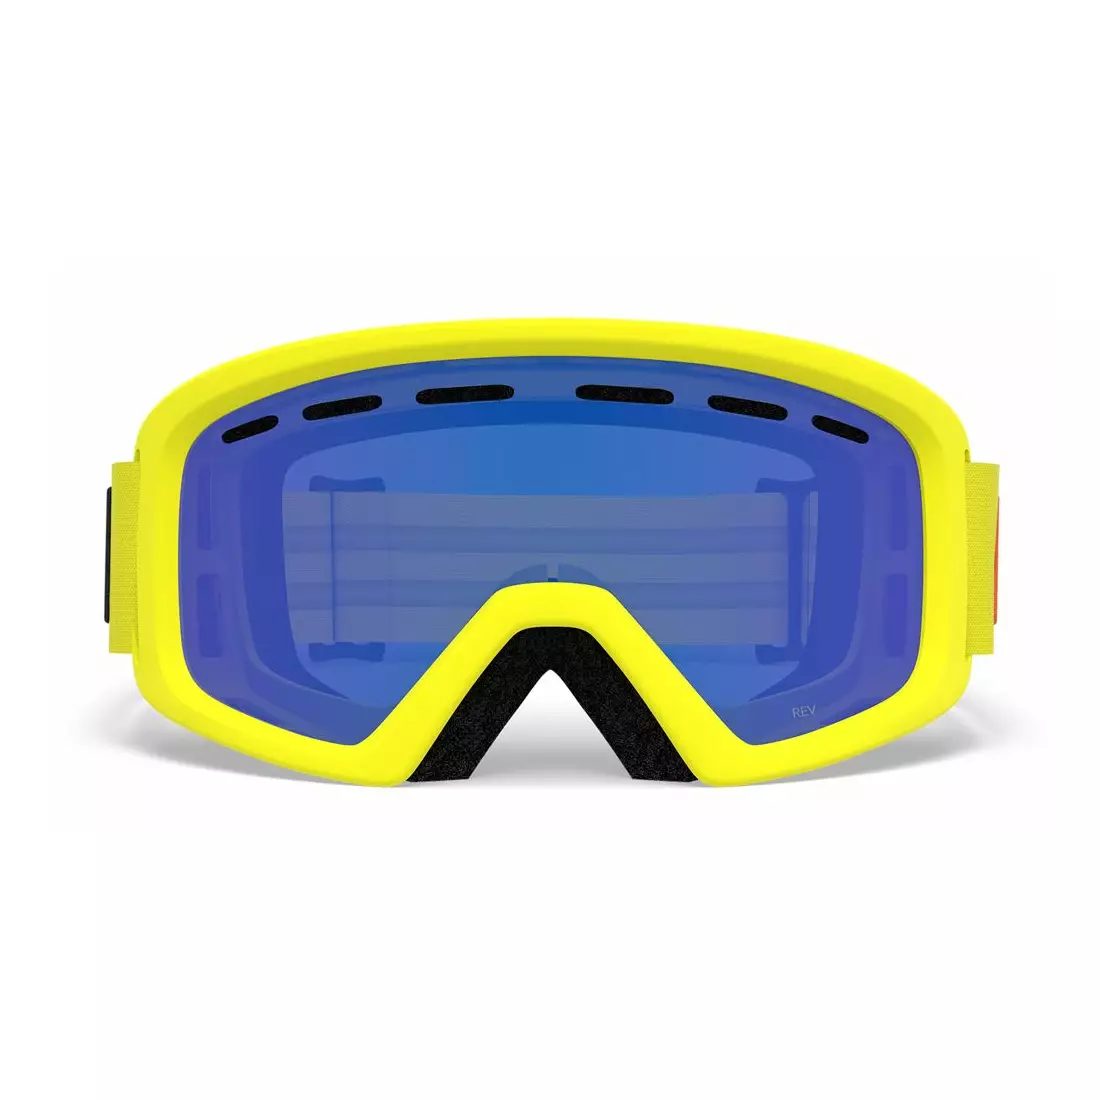 Juniorské lyžiarske / snowboardové okuliare REV NAMUK YELLOW GR-7105433